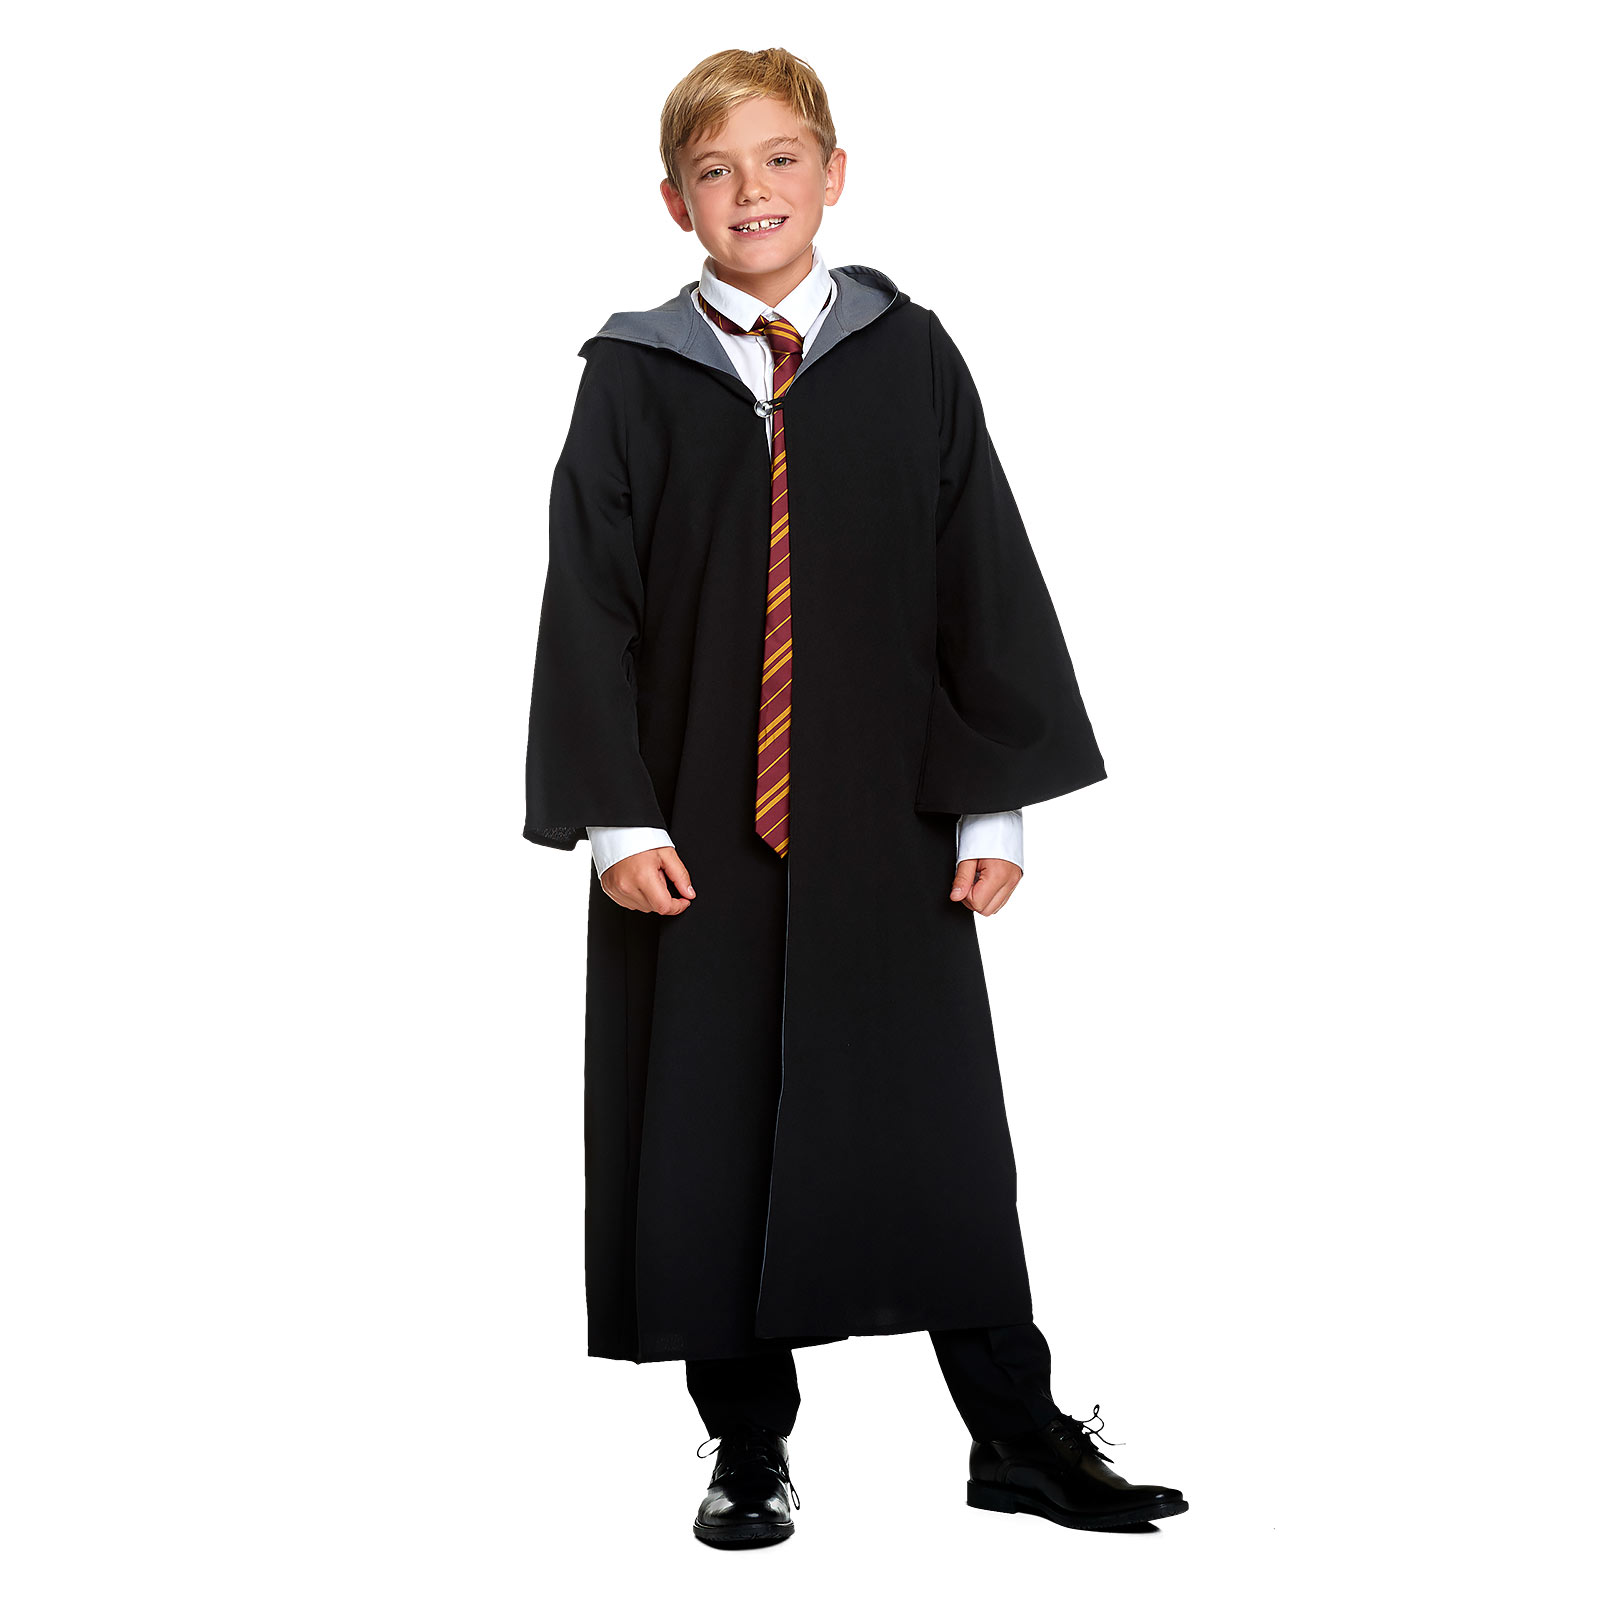 Zauberer Kinder Kostüm Robe mit Kapuze für Harry Potter Fans